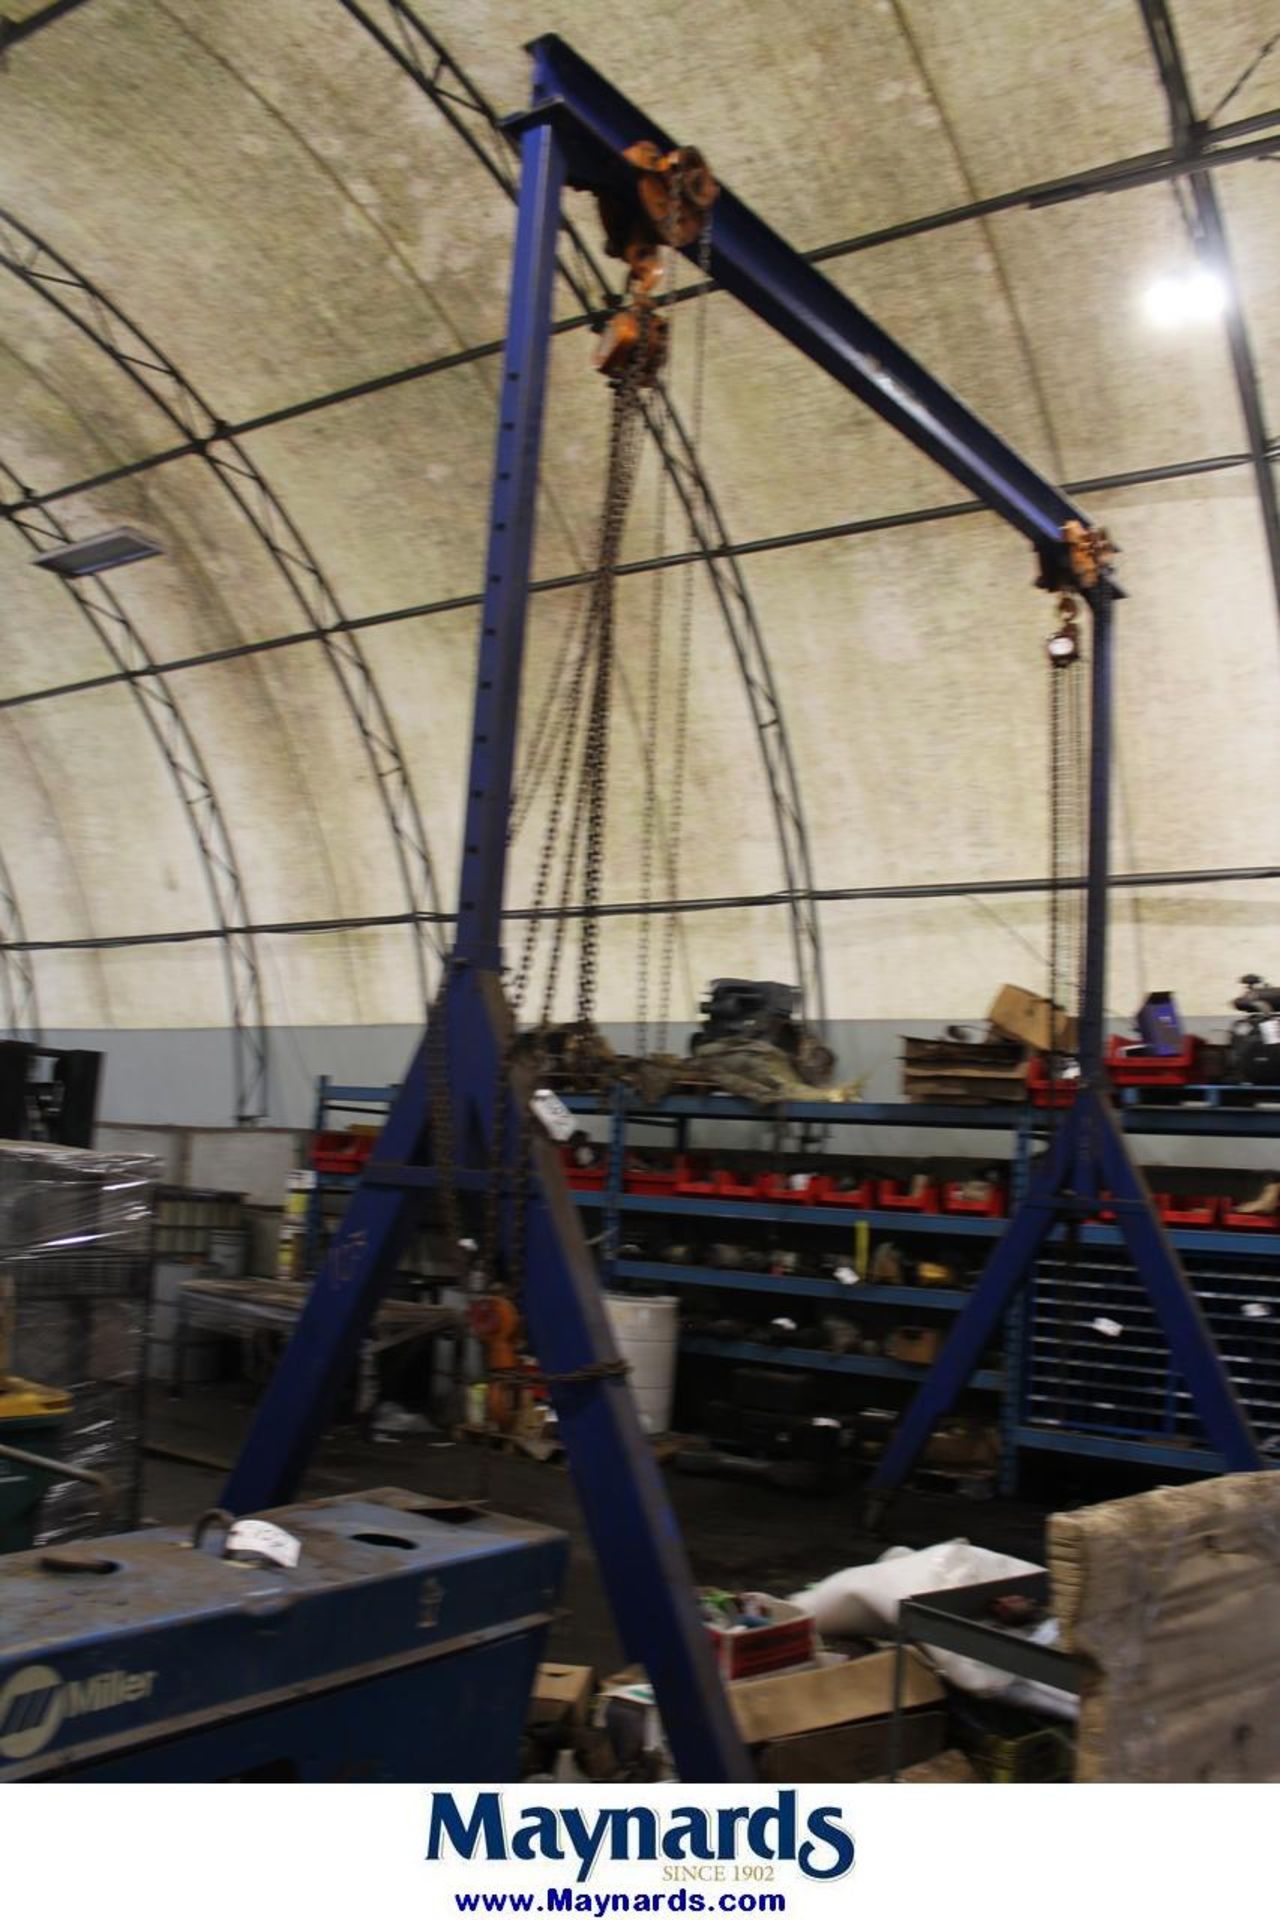 2011 Vestil AHS-8-15-16 8,000 lb capacity adjustable steel gantry crane